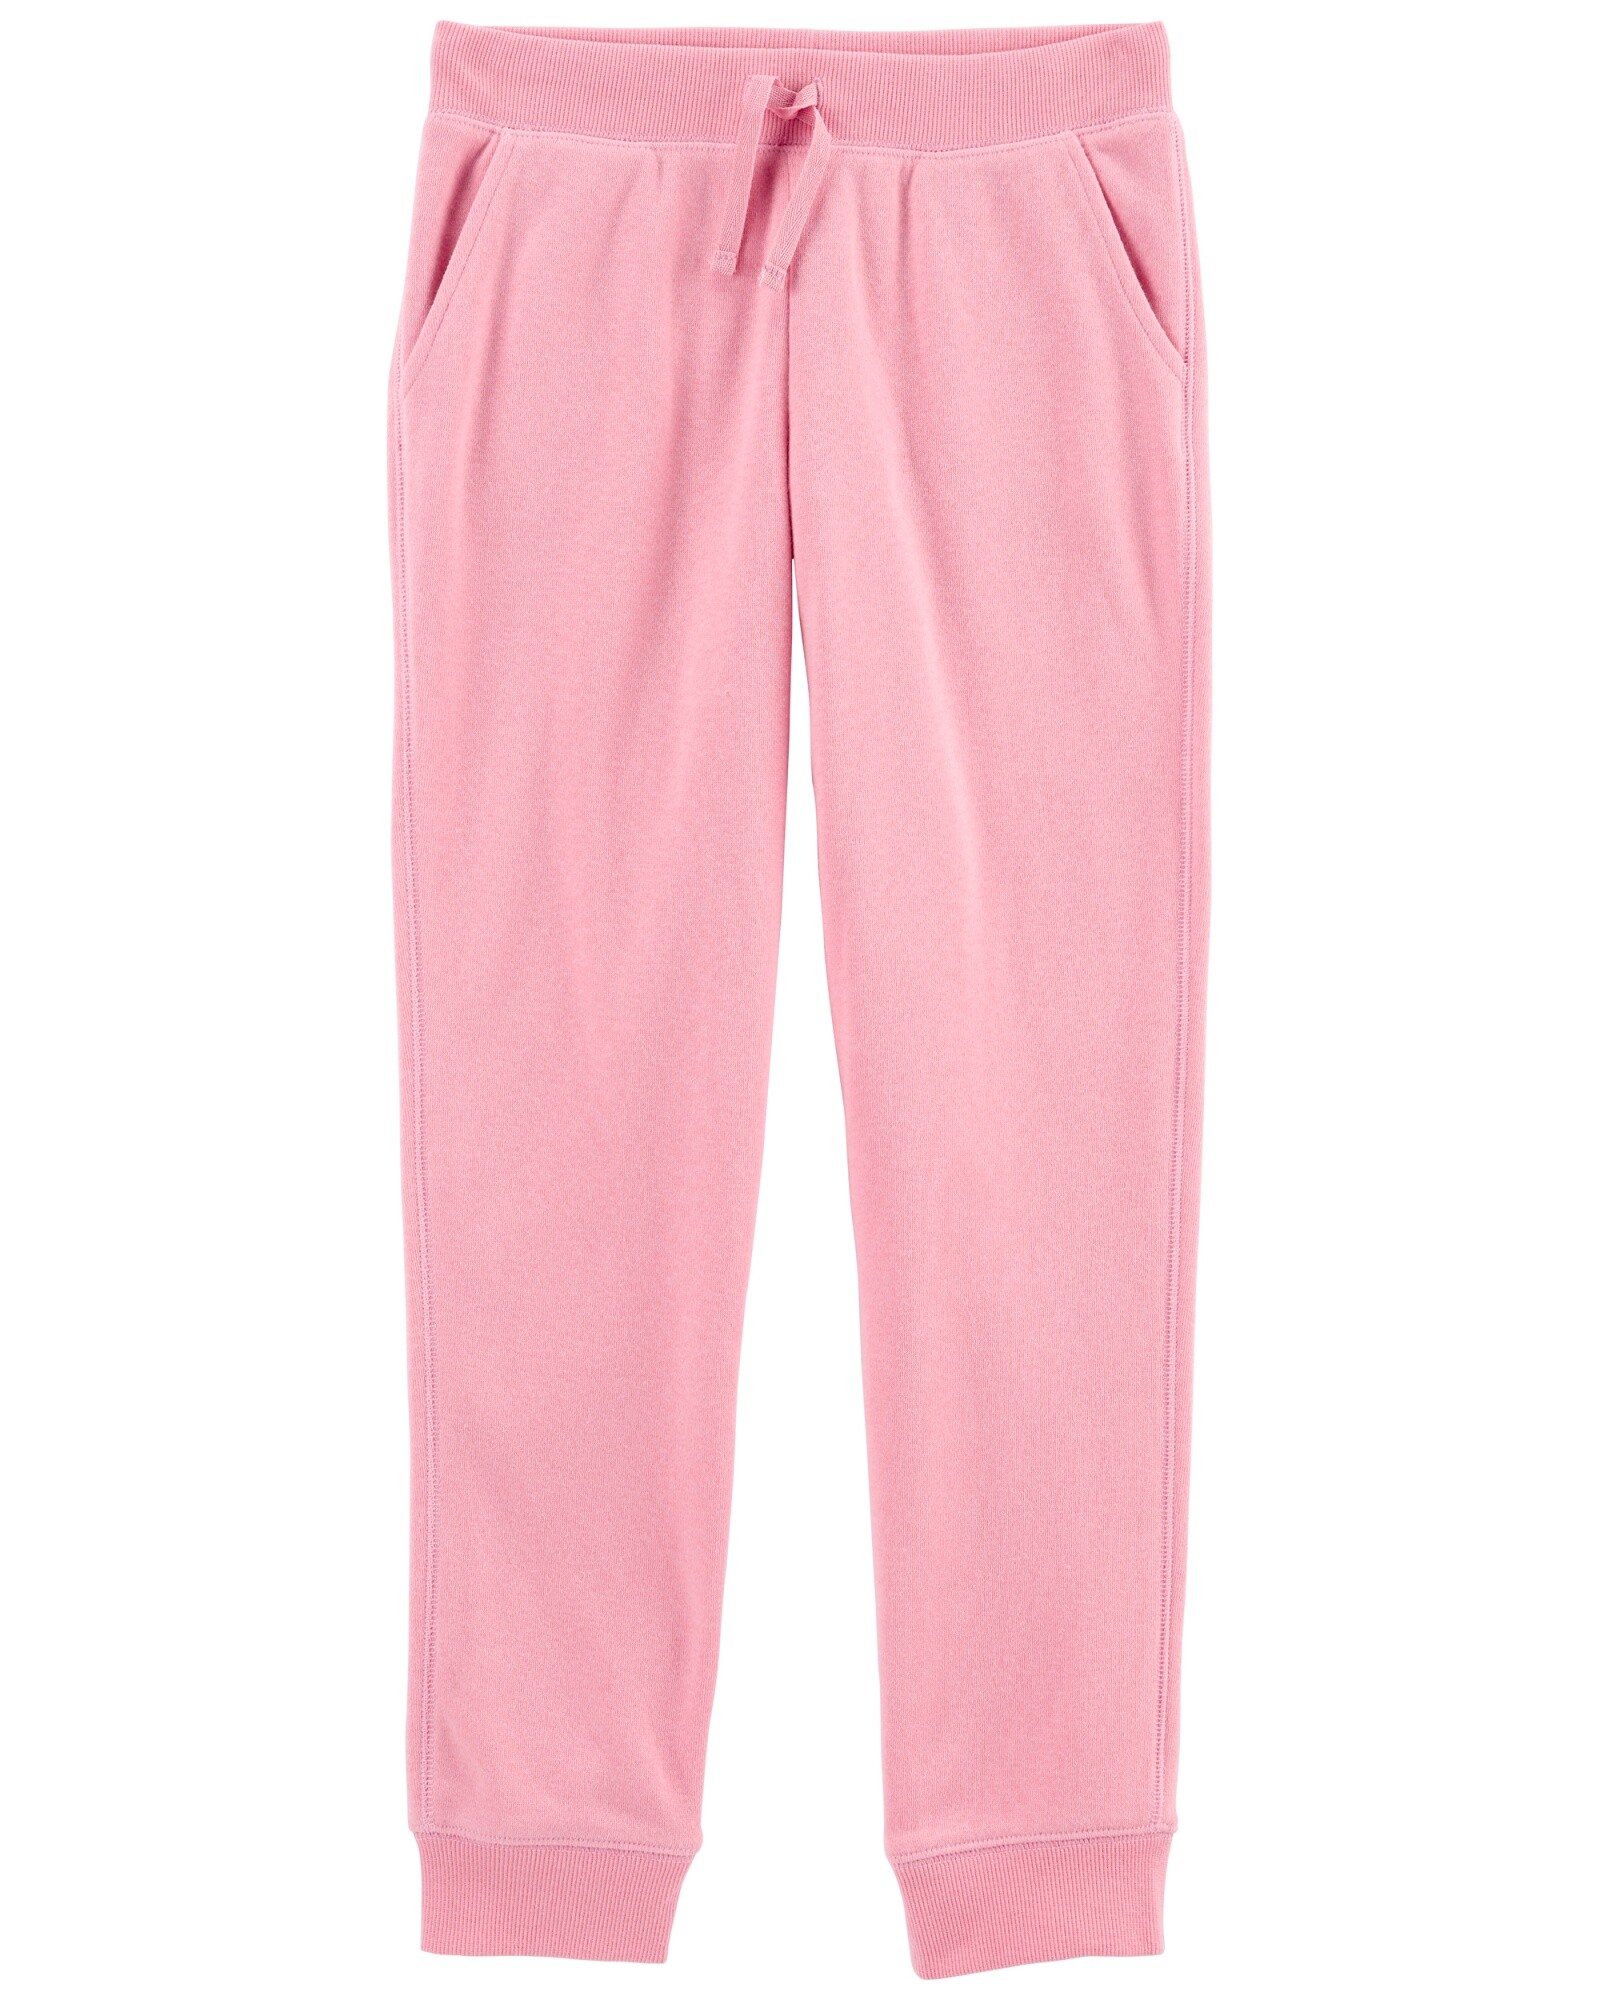 Pantalón deportivo de algodón, rosado. Talles 5-14 Sin color